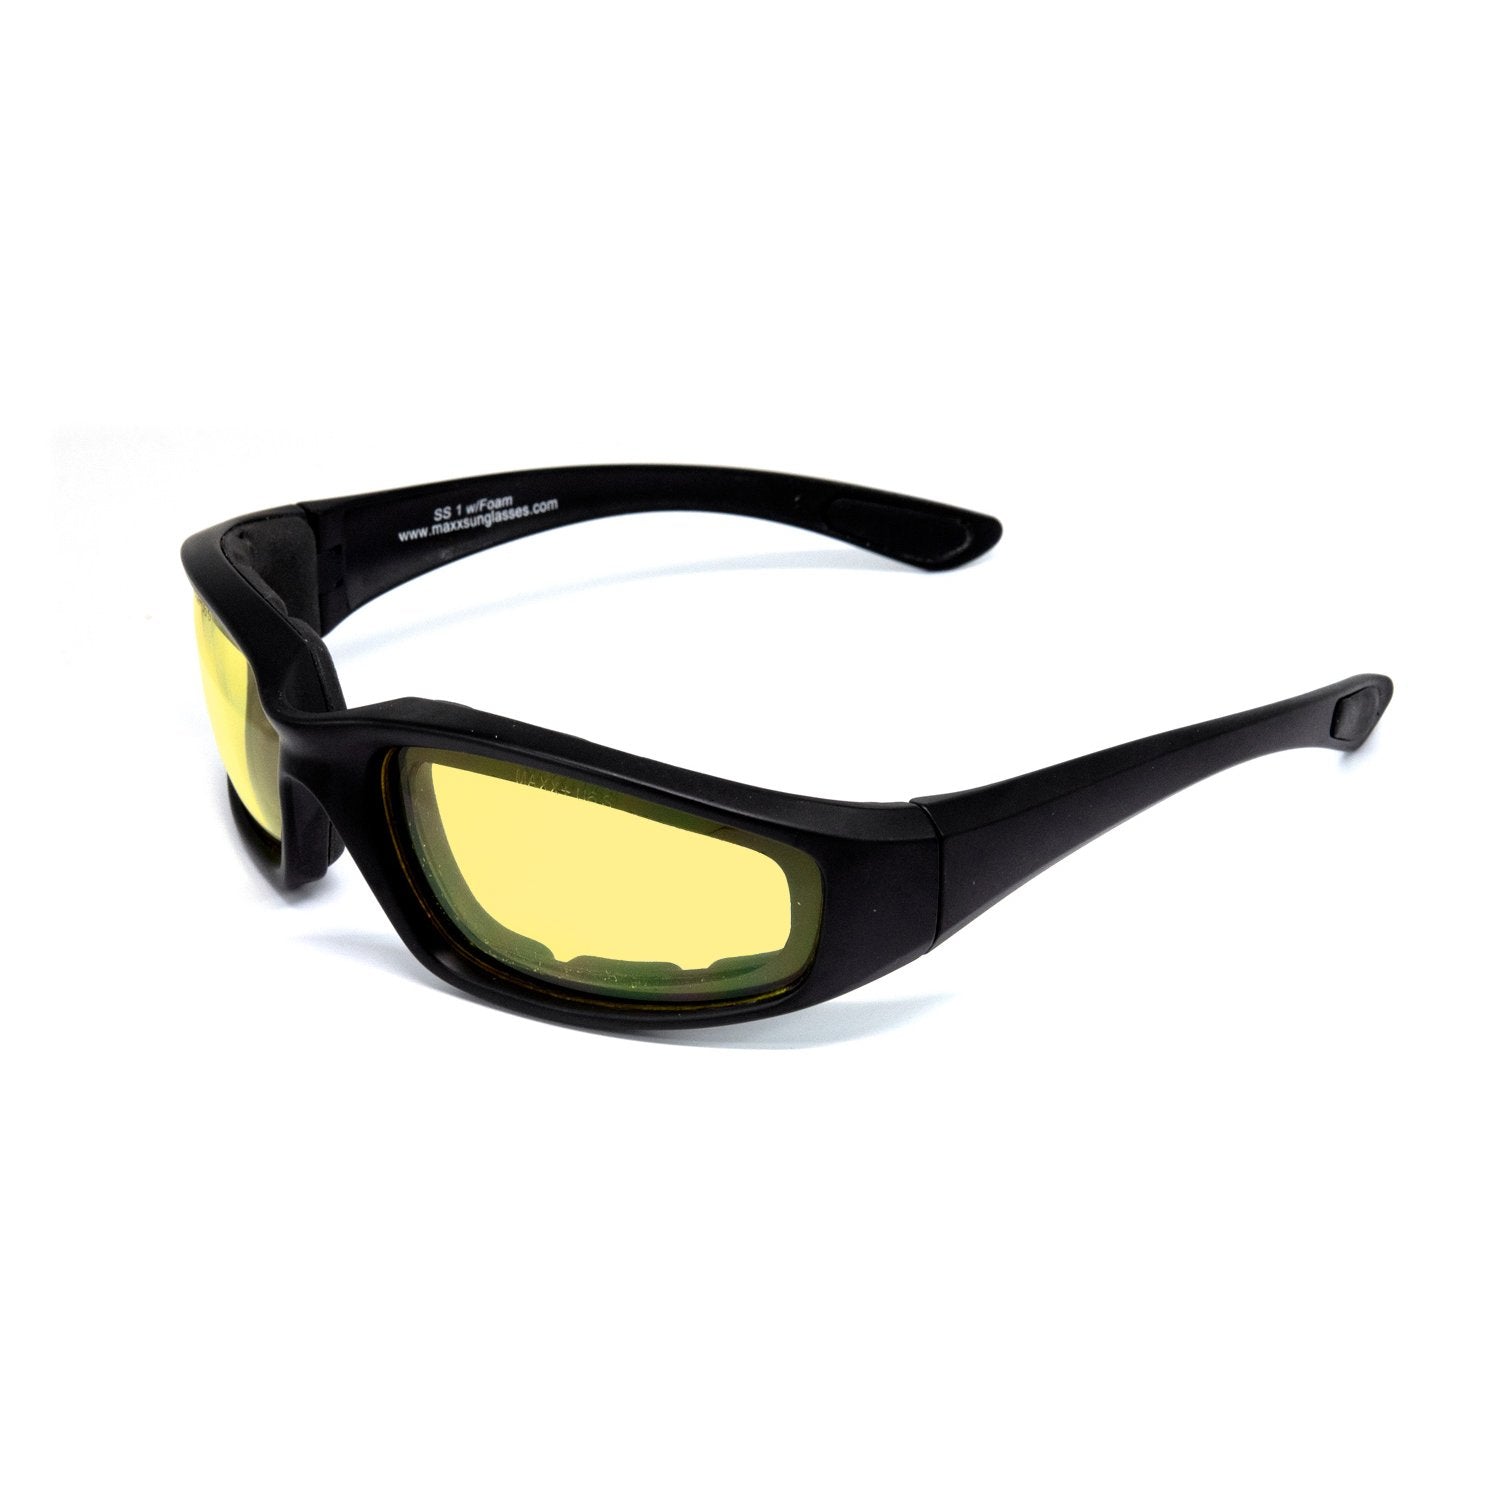 SS1 Z87+ High Impact Sunglasses - Black & Yellow Lens